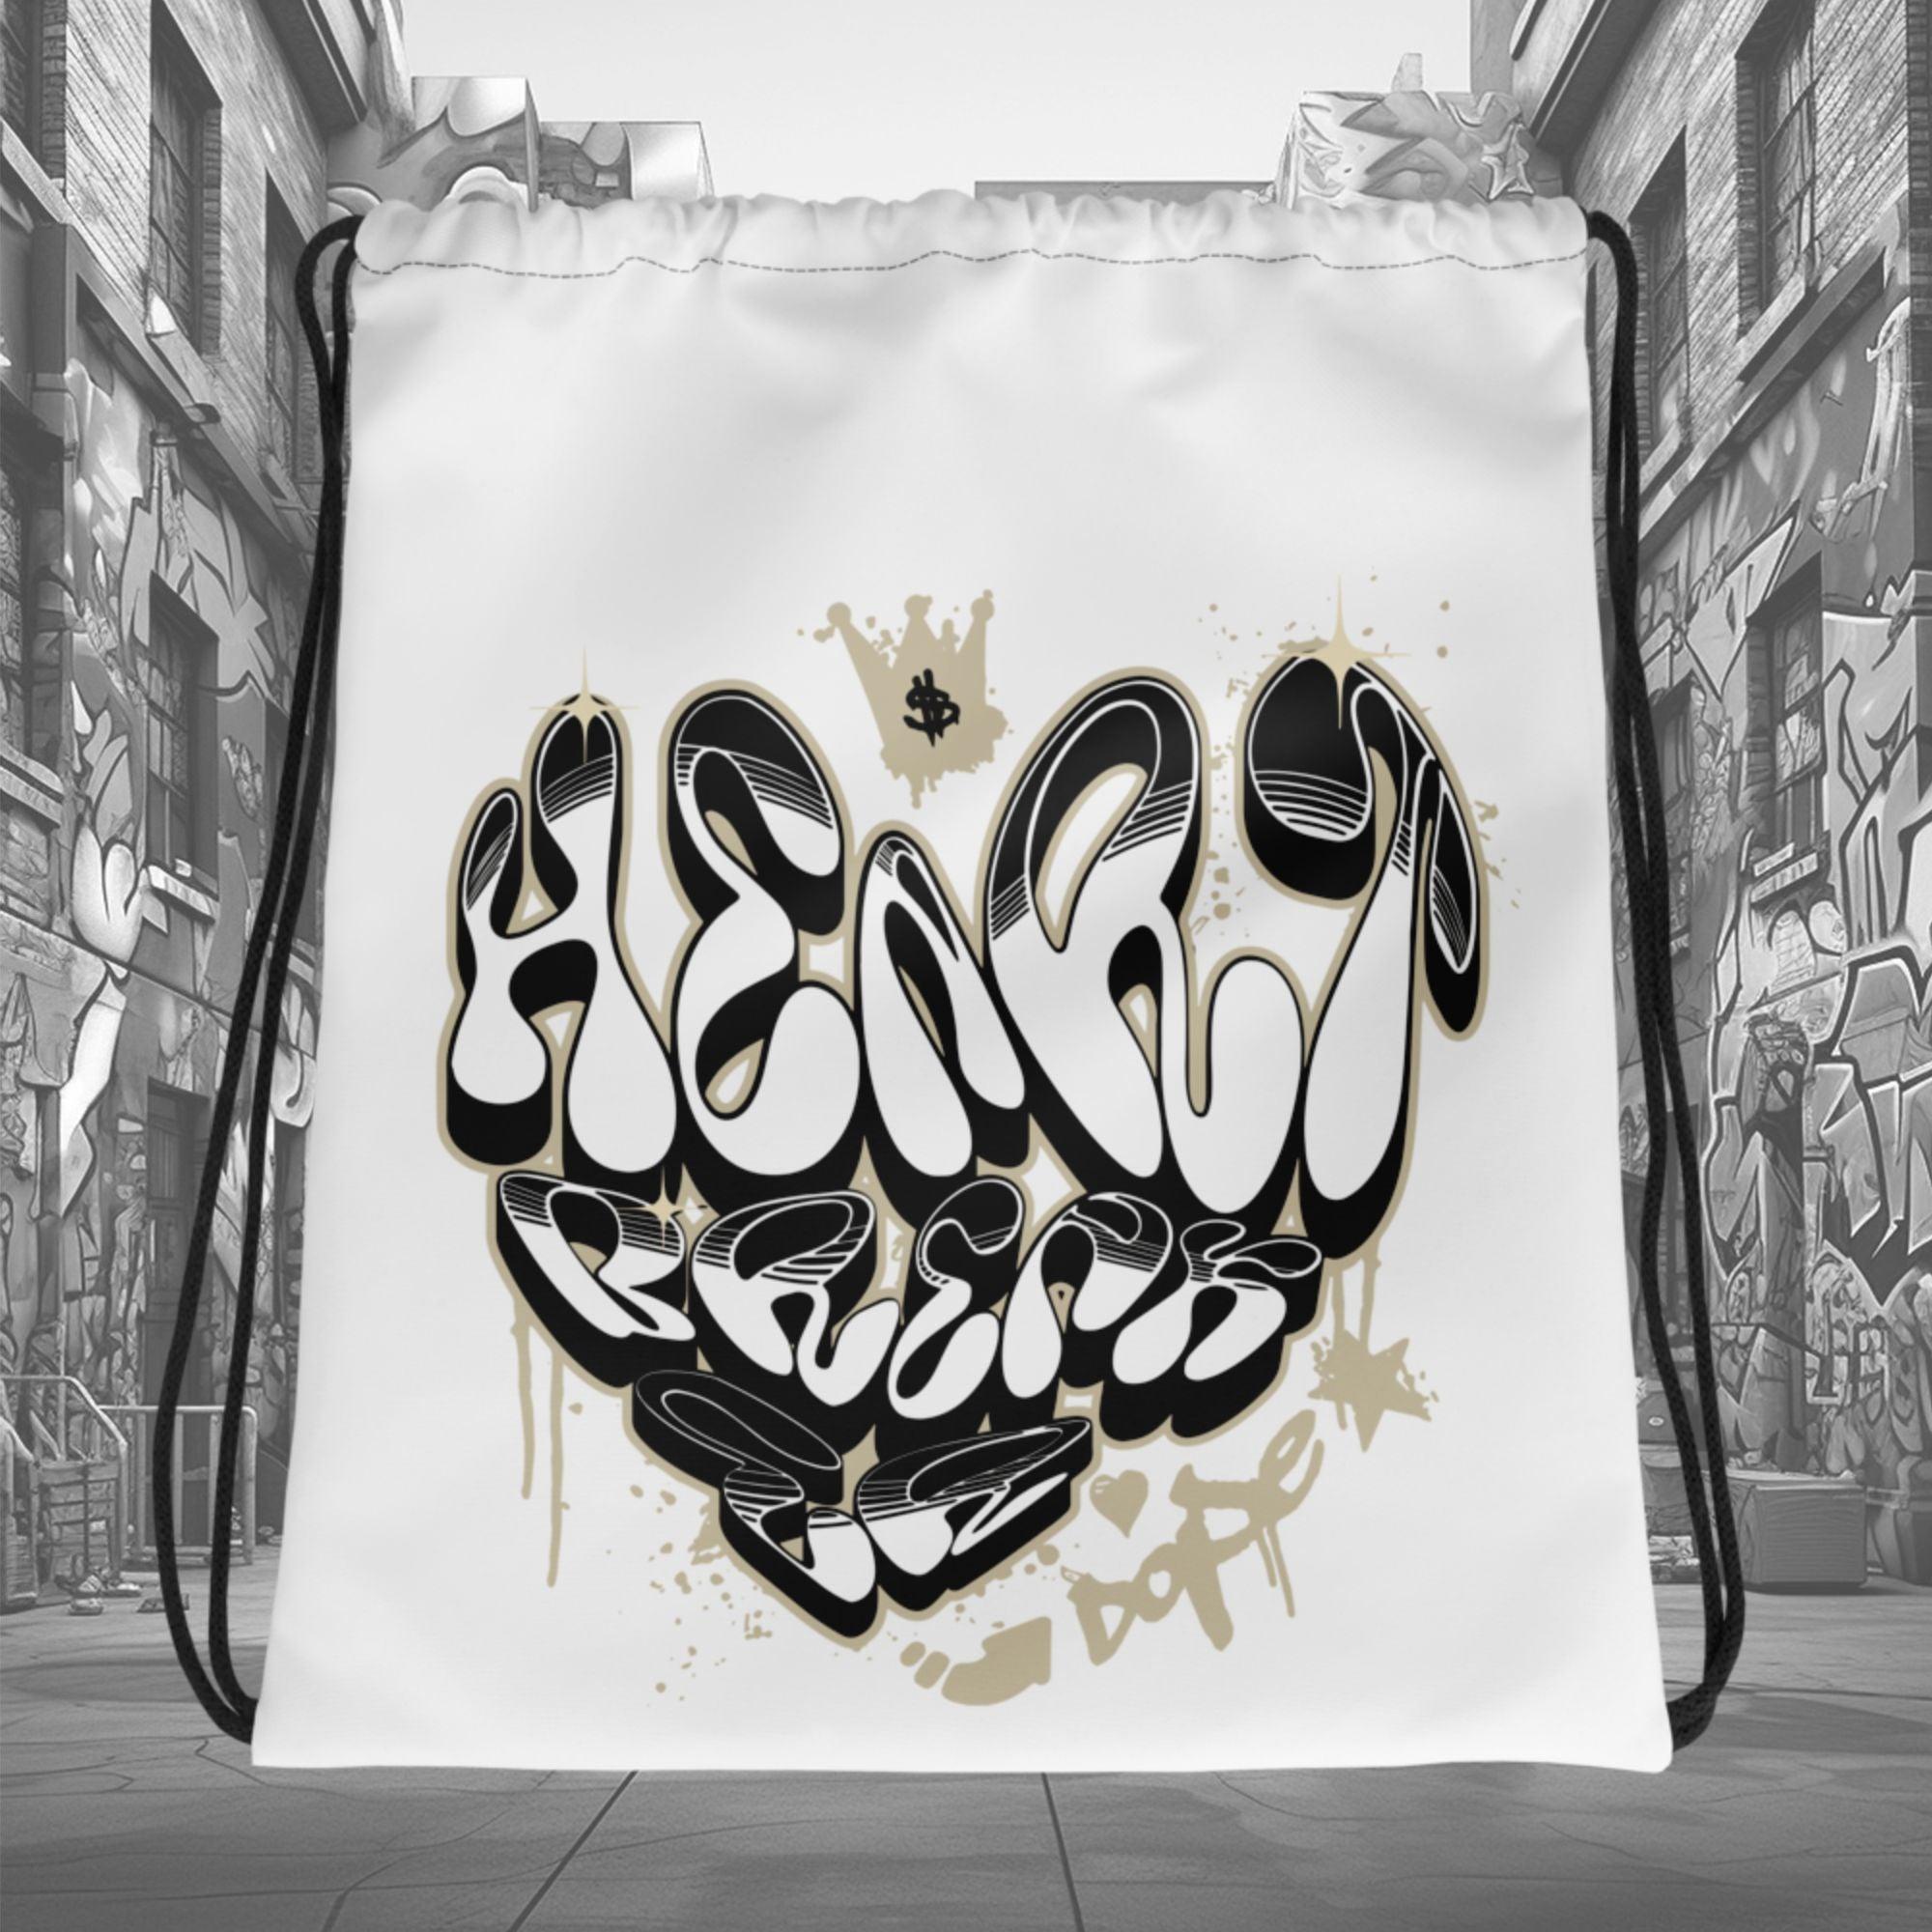 Amazing White Heartbreaker Graffiti Drawstring Bag AIR JORDAN 11 RETRO GRATITUDE photo.